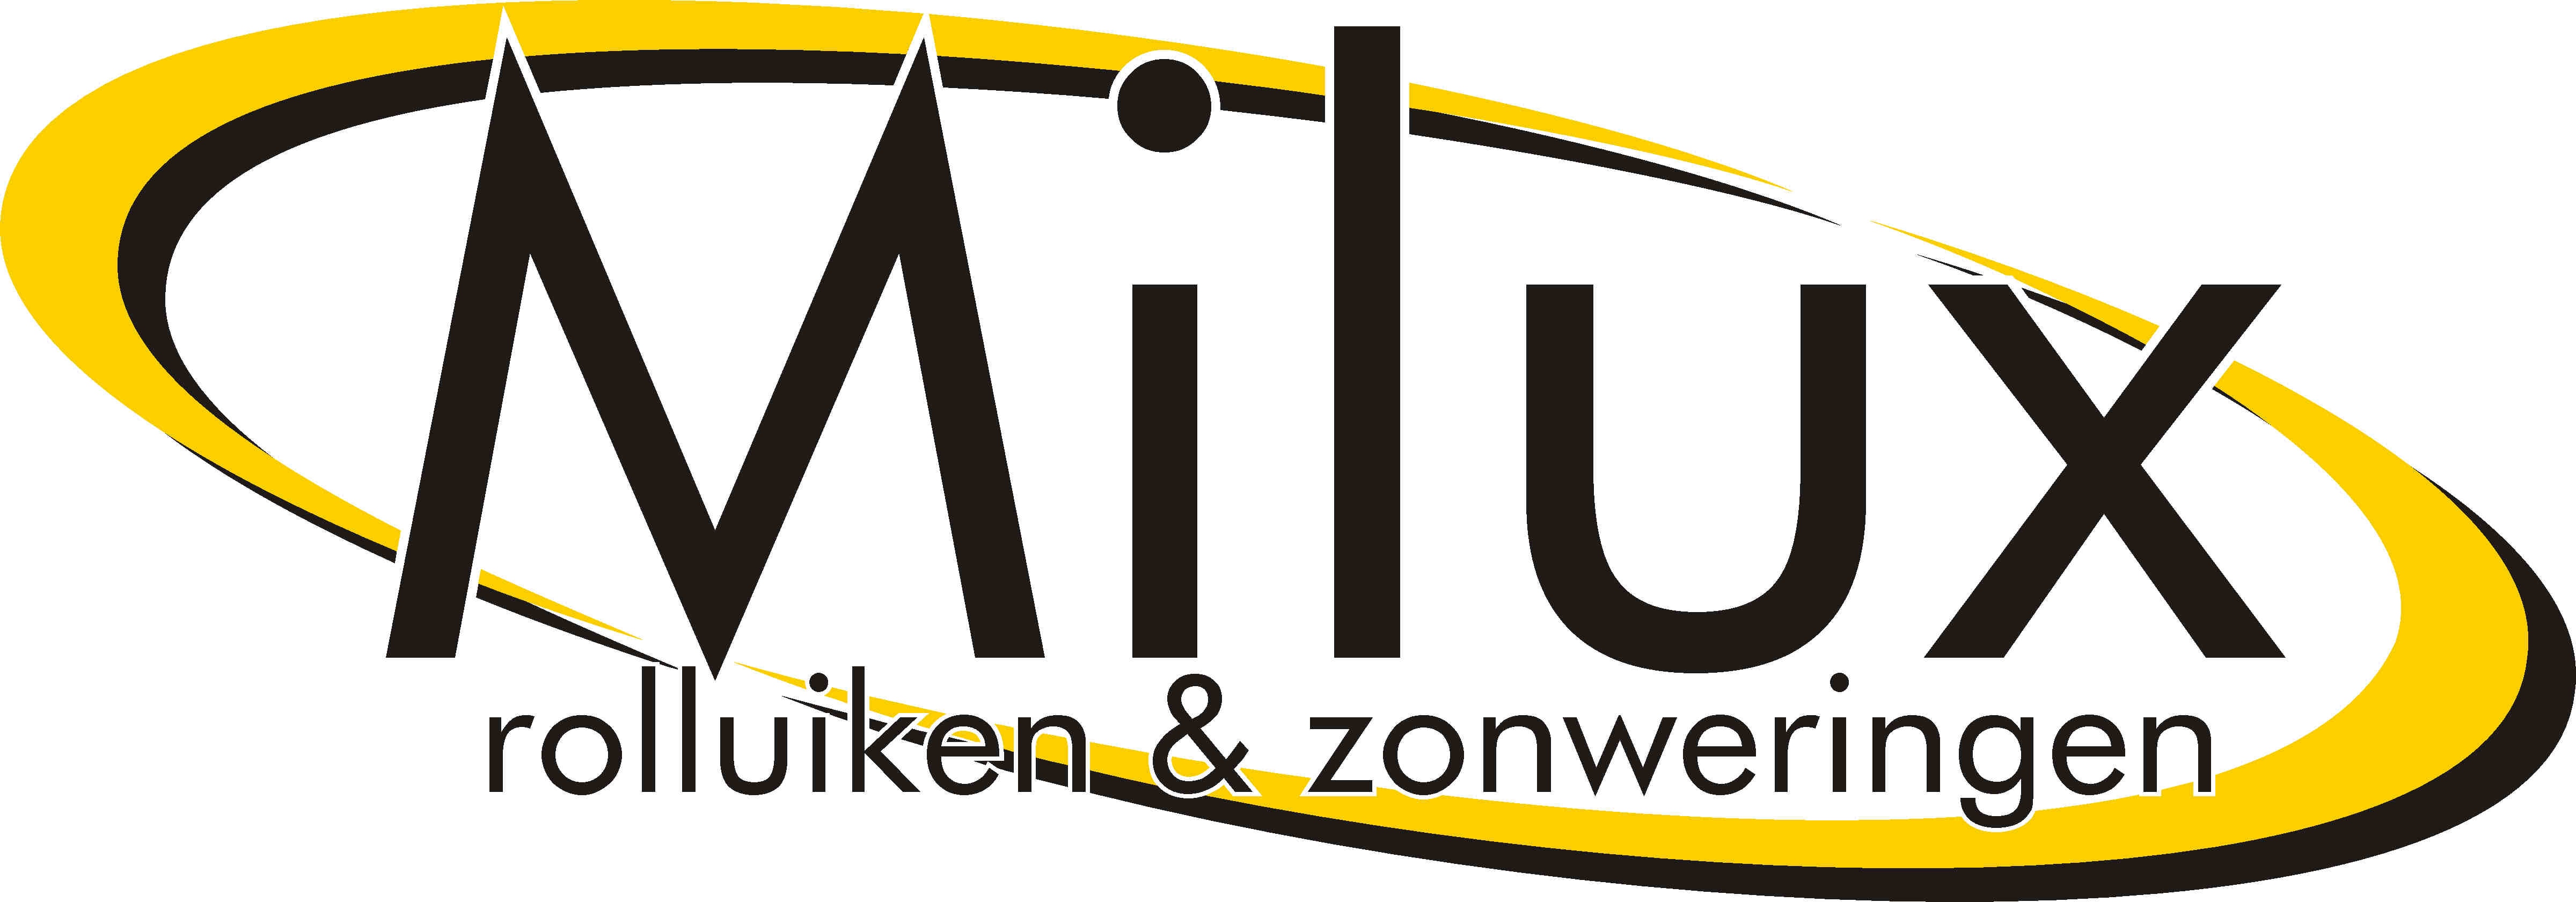 Milux_logo.jpg